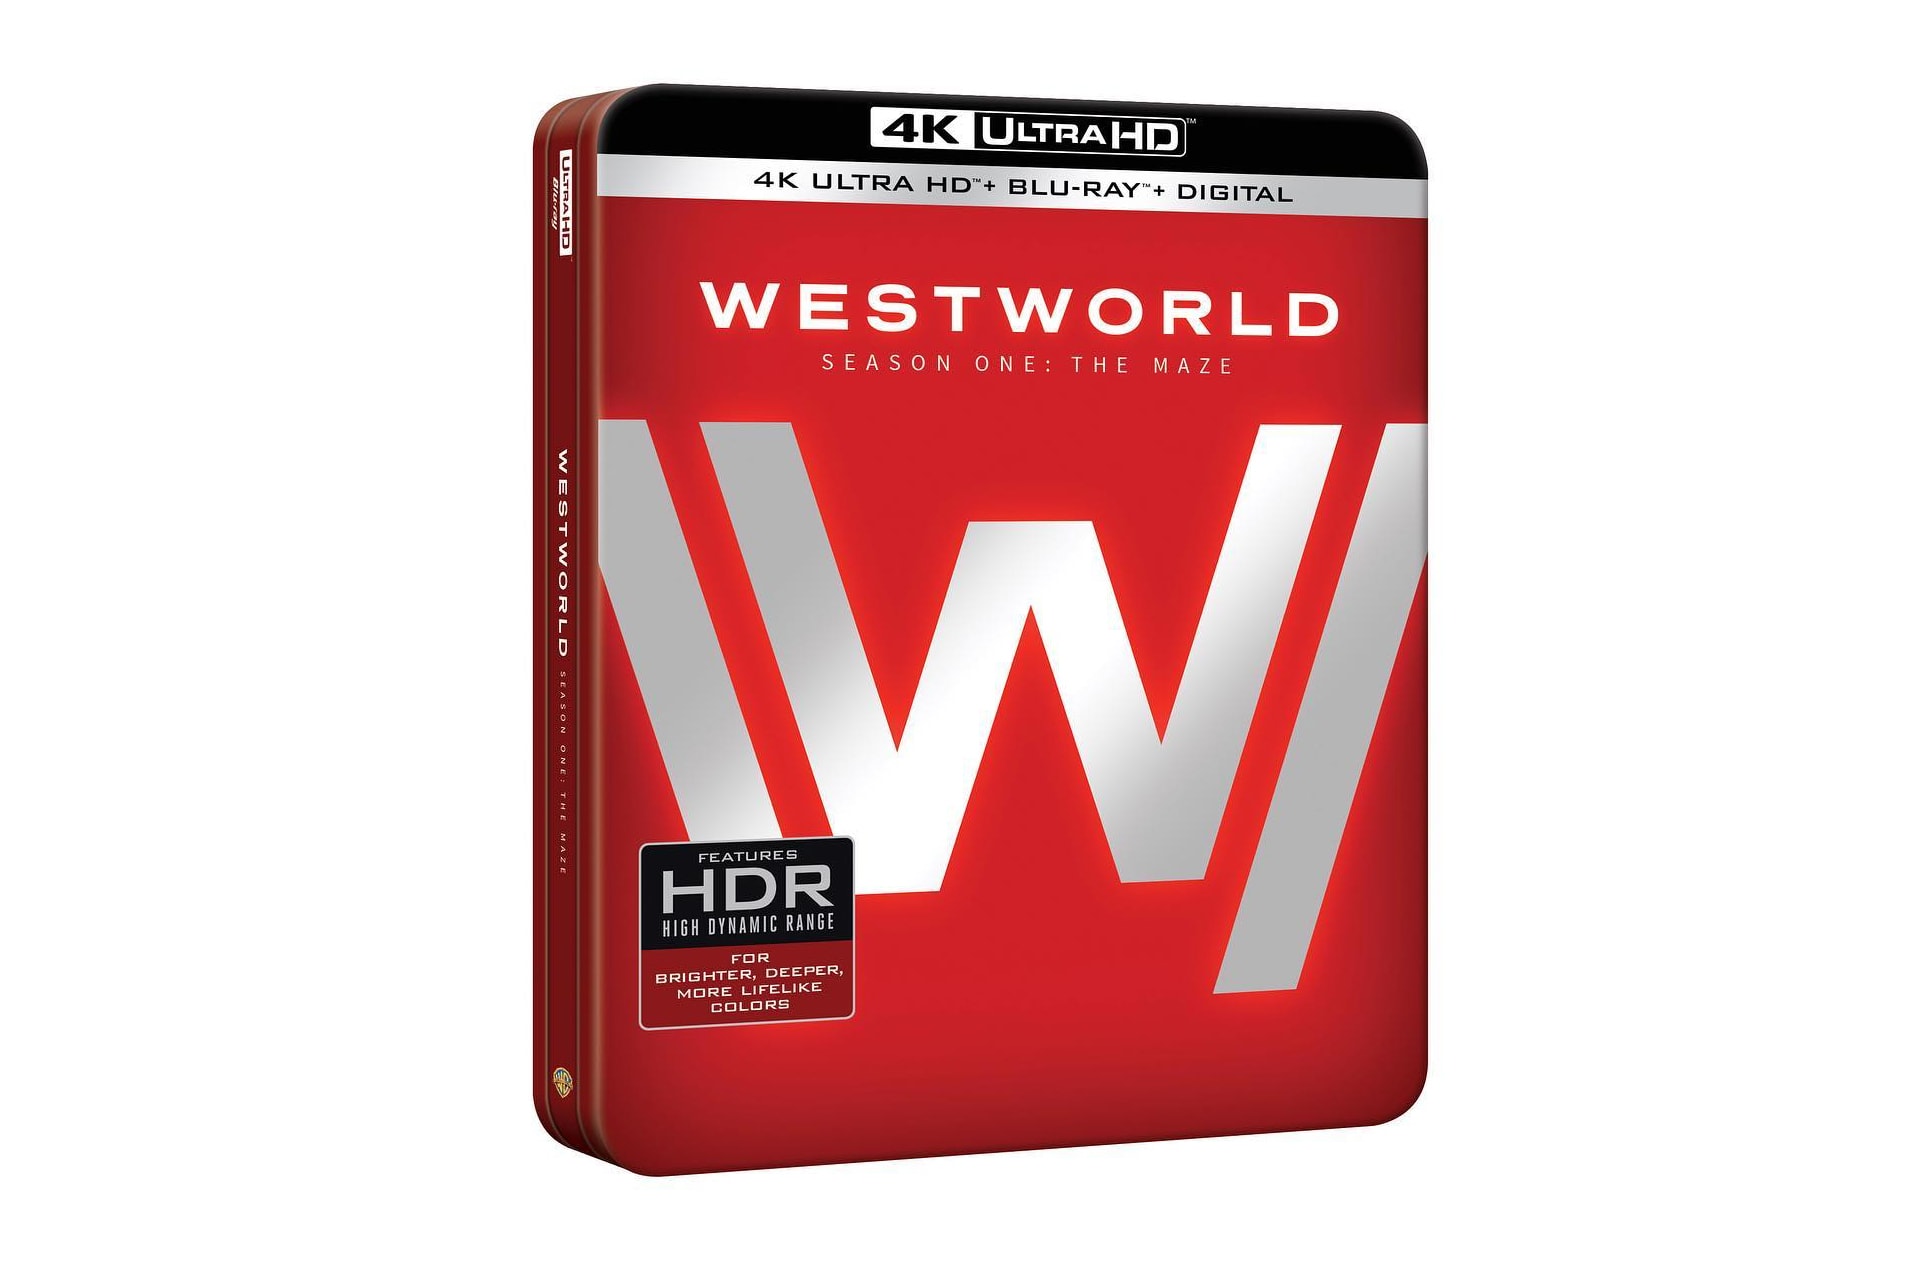 'Westworld' Releases on 4K Ultra HD Blu-Ray